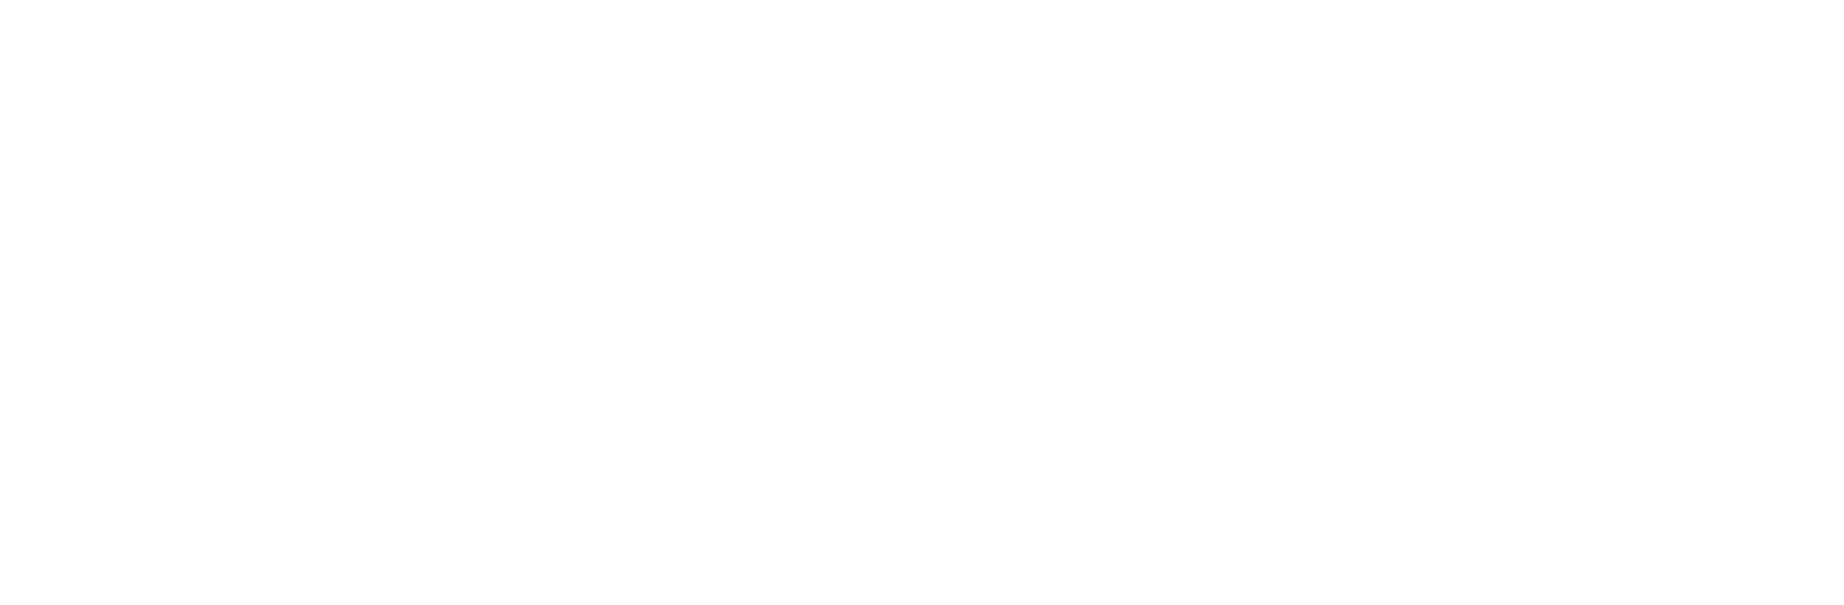 Mmsd Final Stacked Logo Reverse